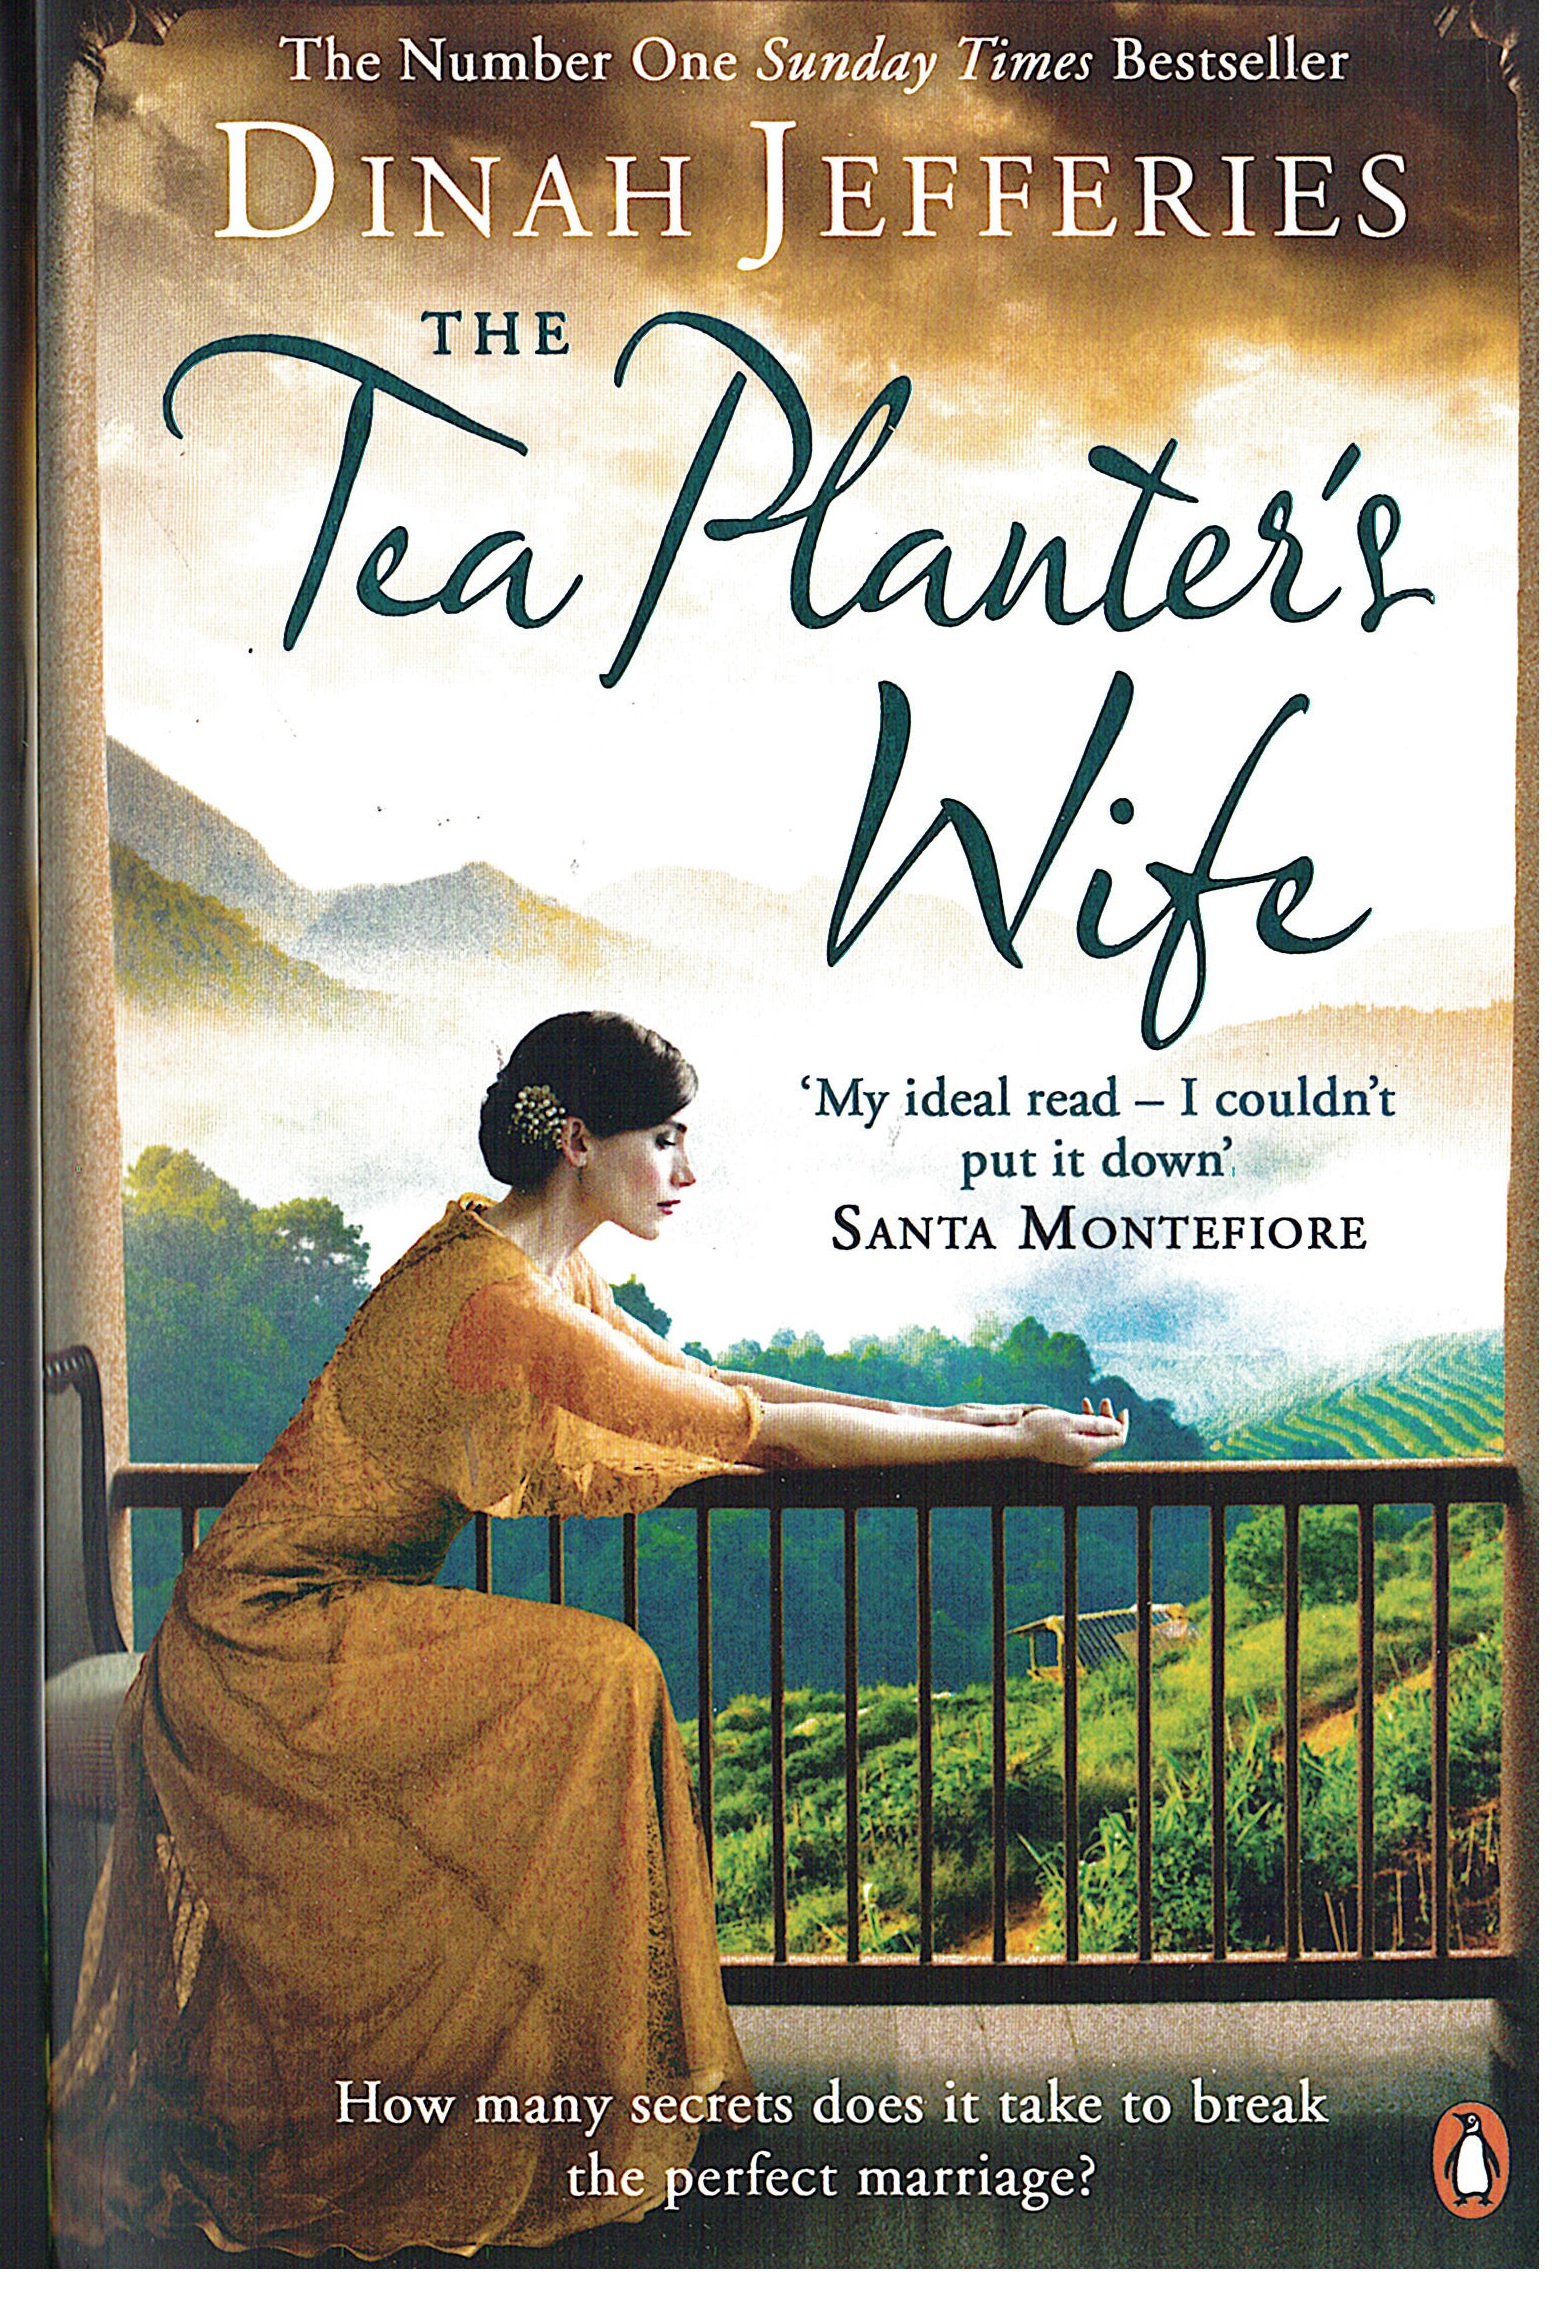 Tea Planters Wife